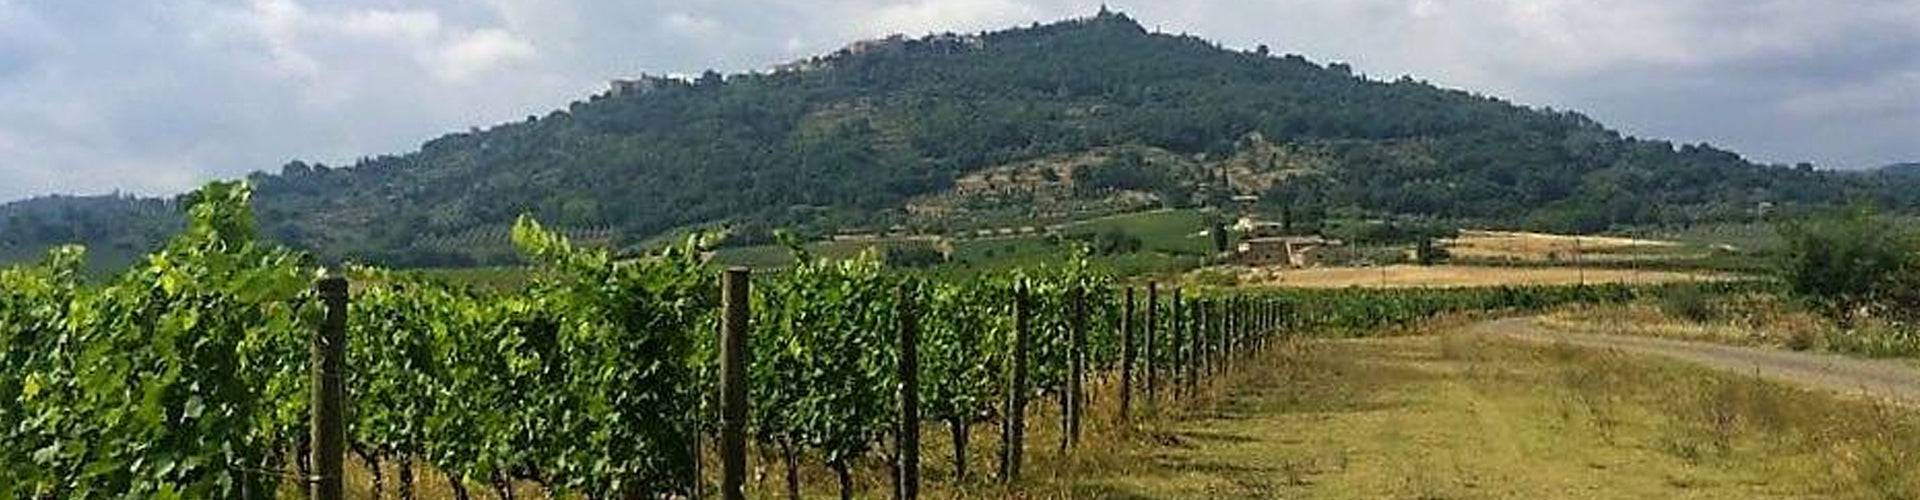 The vineyards of Valdicava near Montalcino in the province of Siena, Italy